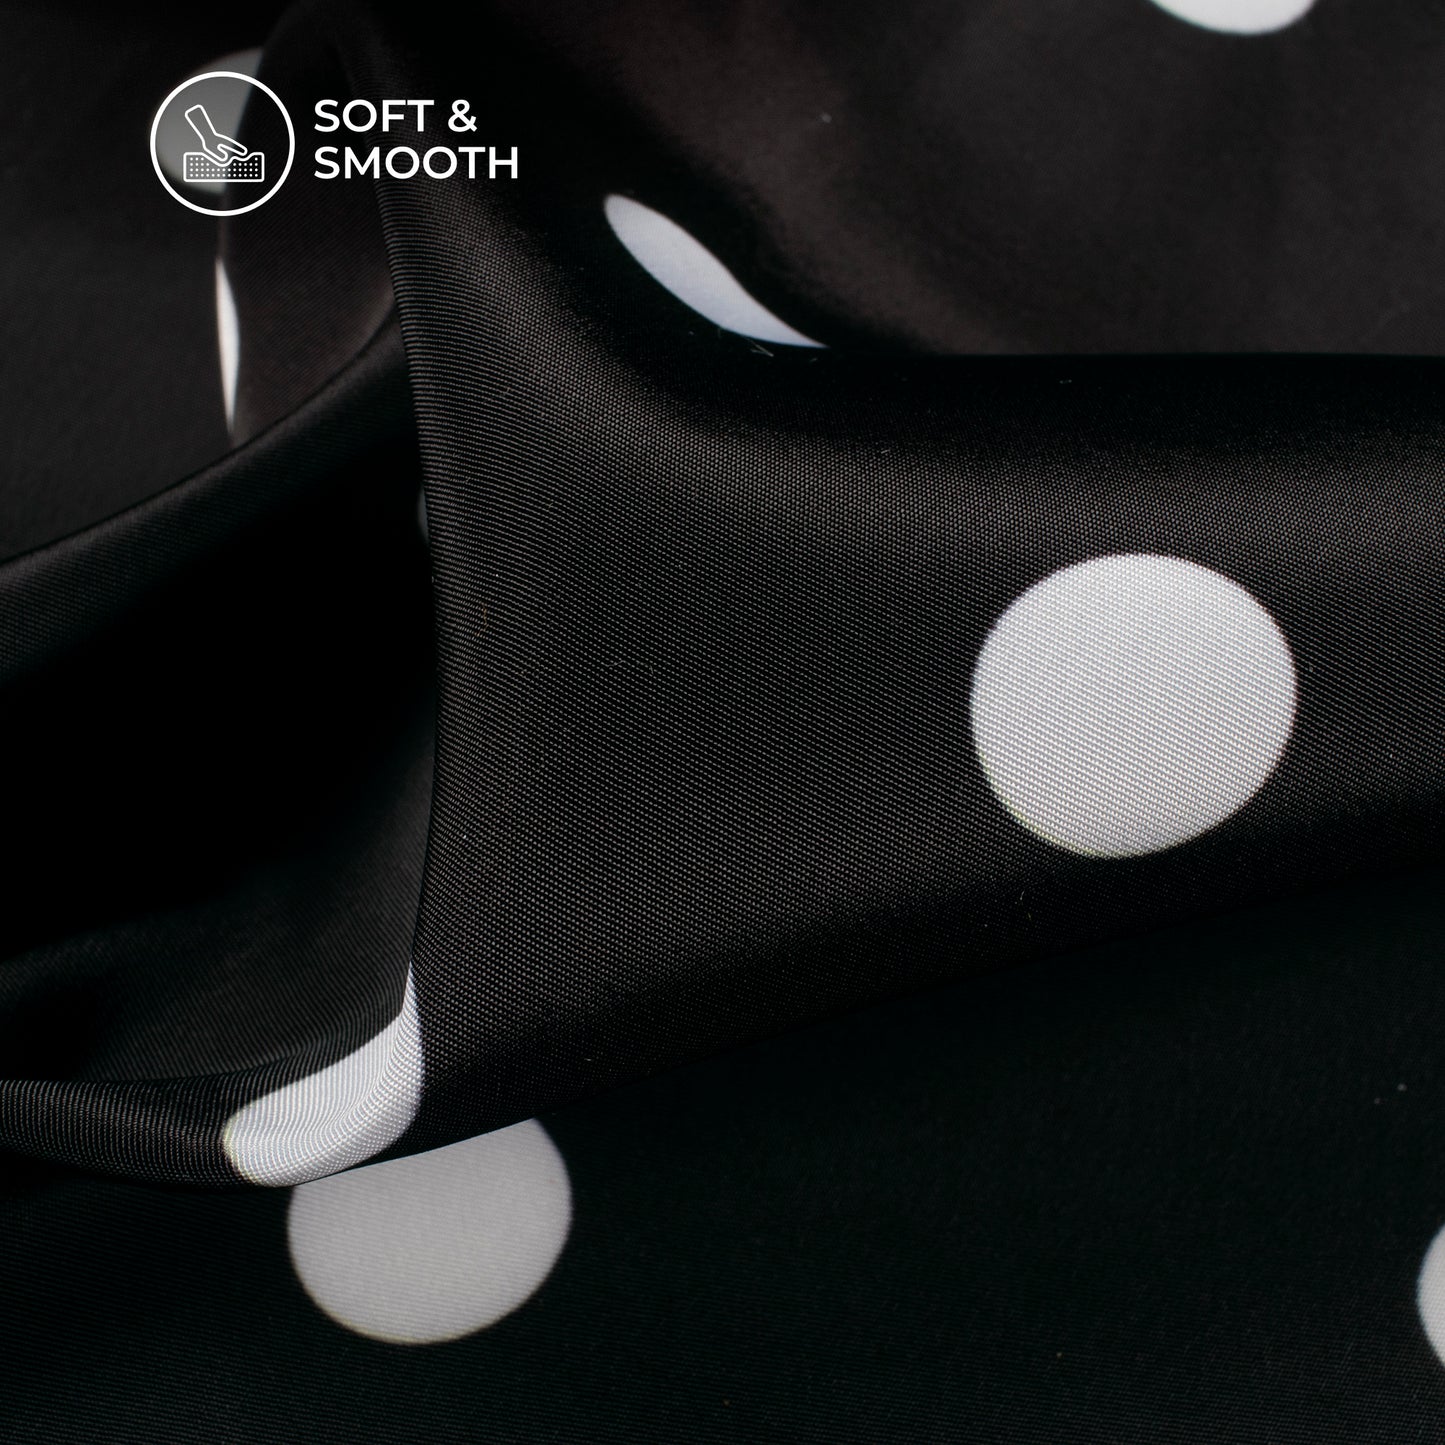 Black Polka Dot Digital Print Crepe Satin Fabric